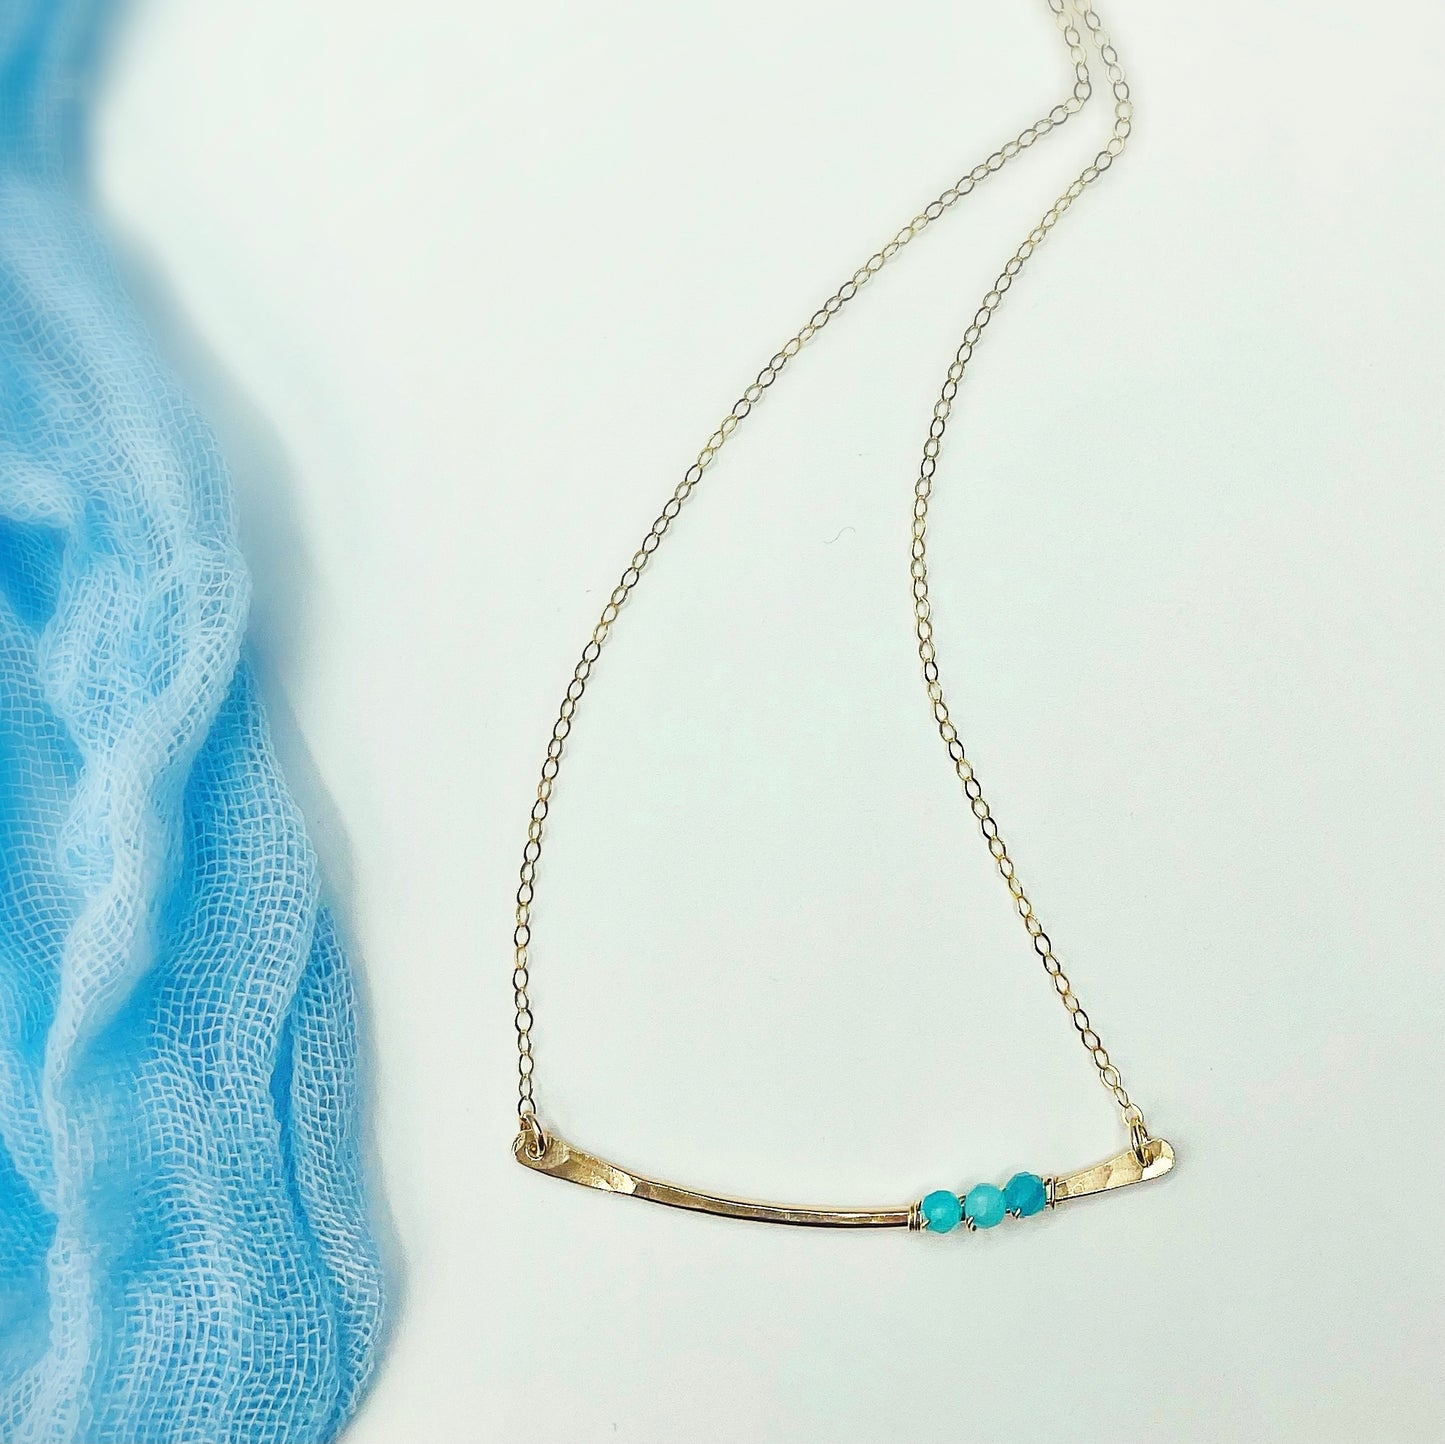 Aqua Wrapped Bar Necklace - Blue Sky Feathers